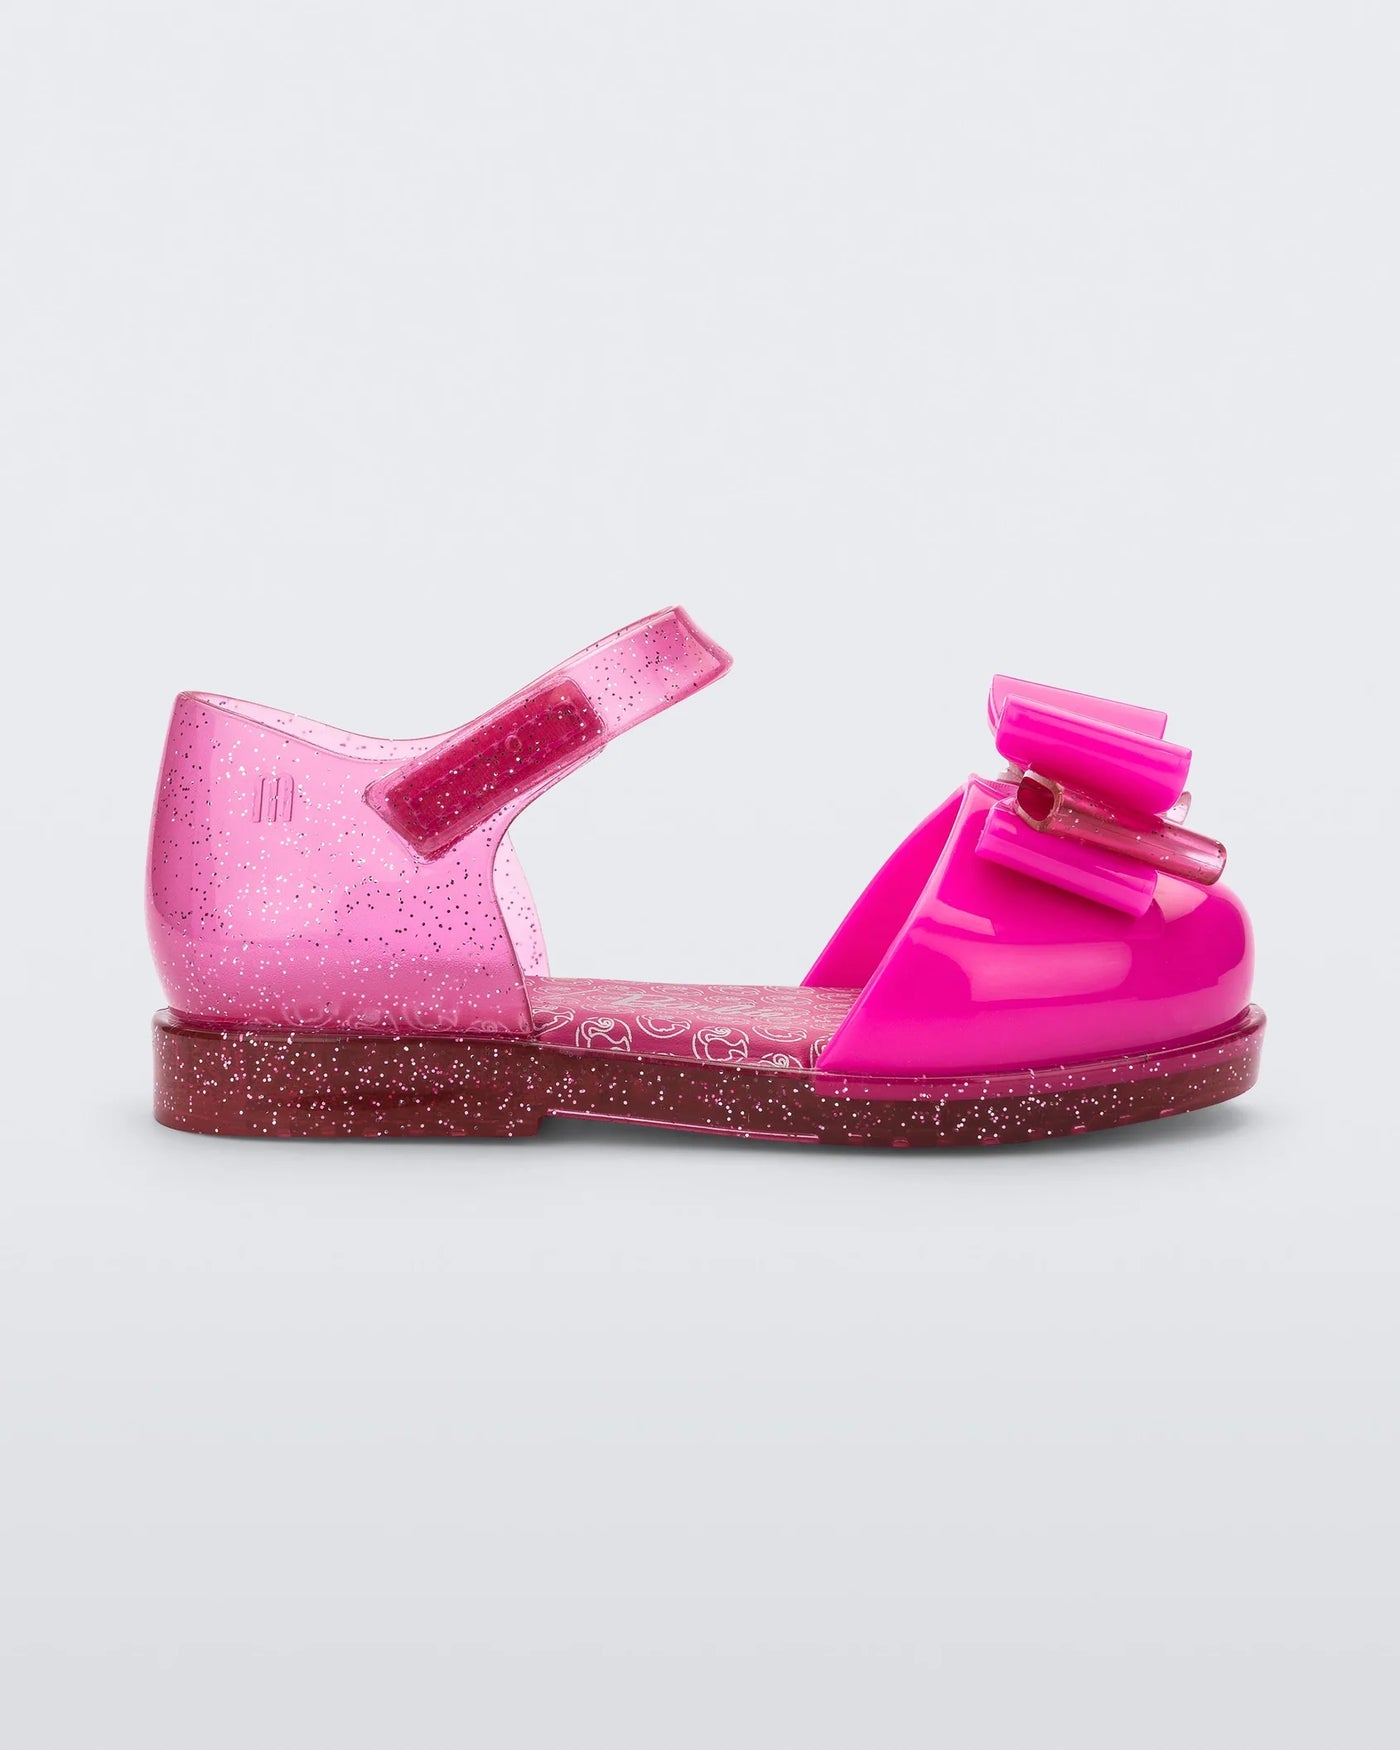 Mini Melissa Amy + Barbie Shoe